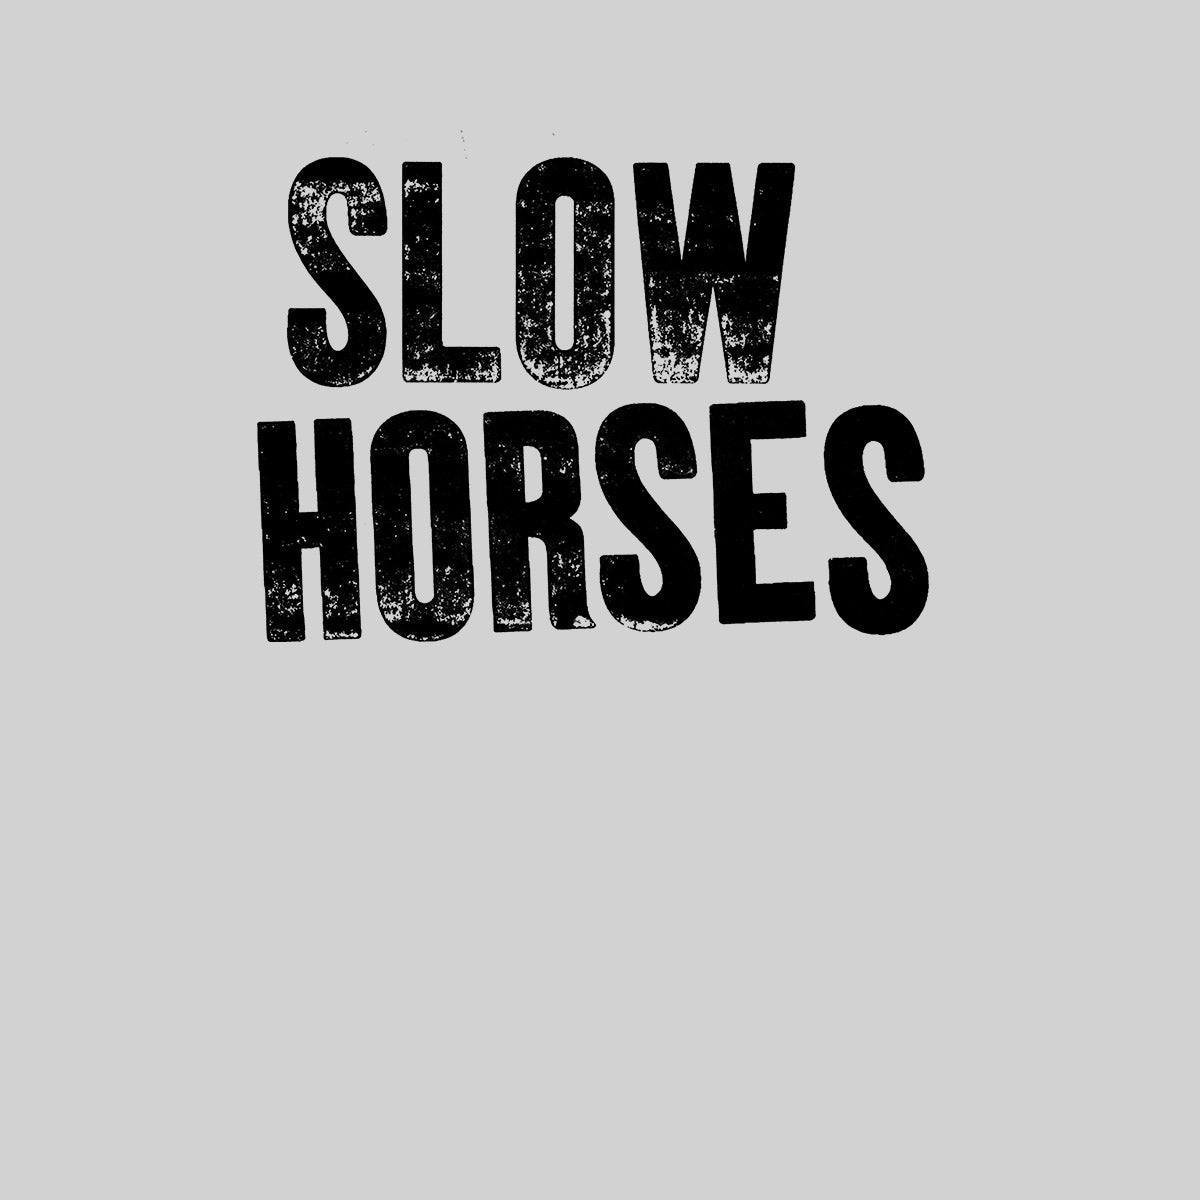 Slow Horses Black t-Shirt Unisex Tees